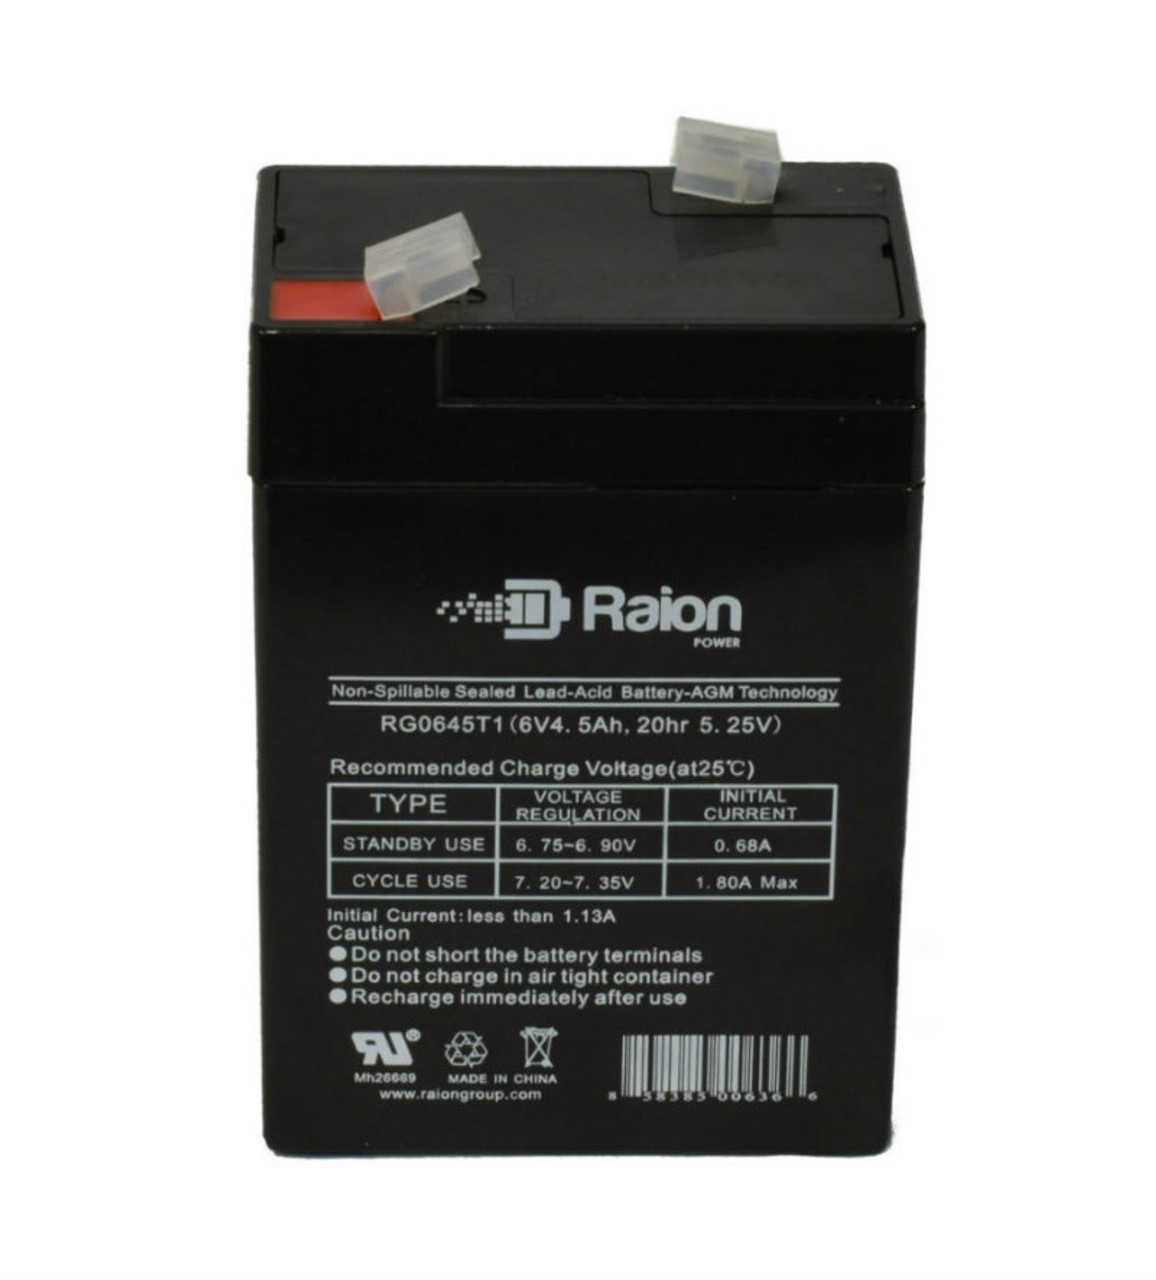 Raion Power RG0645T1 Replacement Battery Cartridge for Wangpin 3FM4